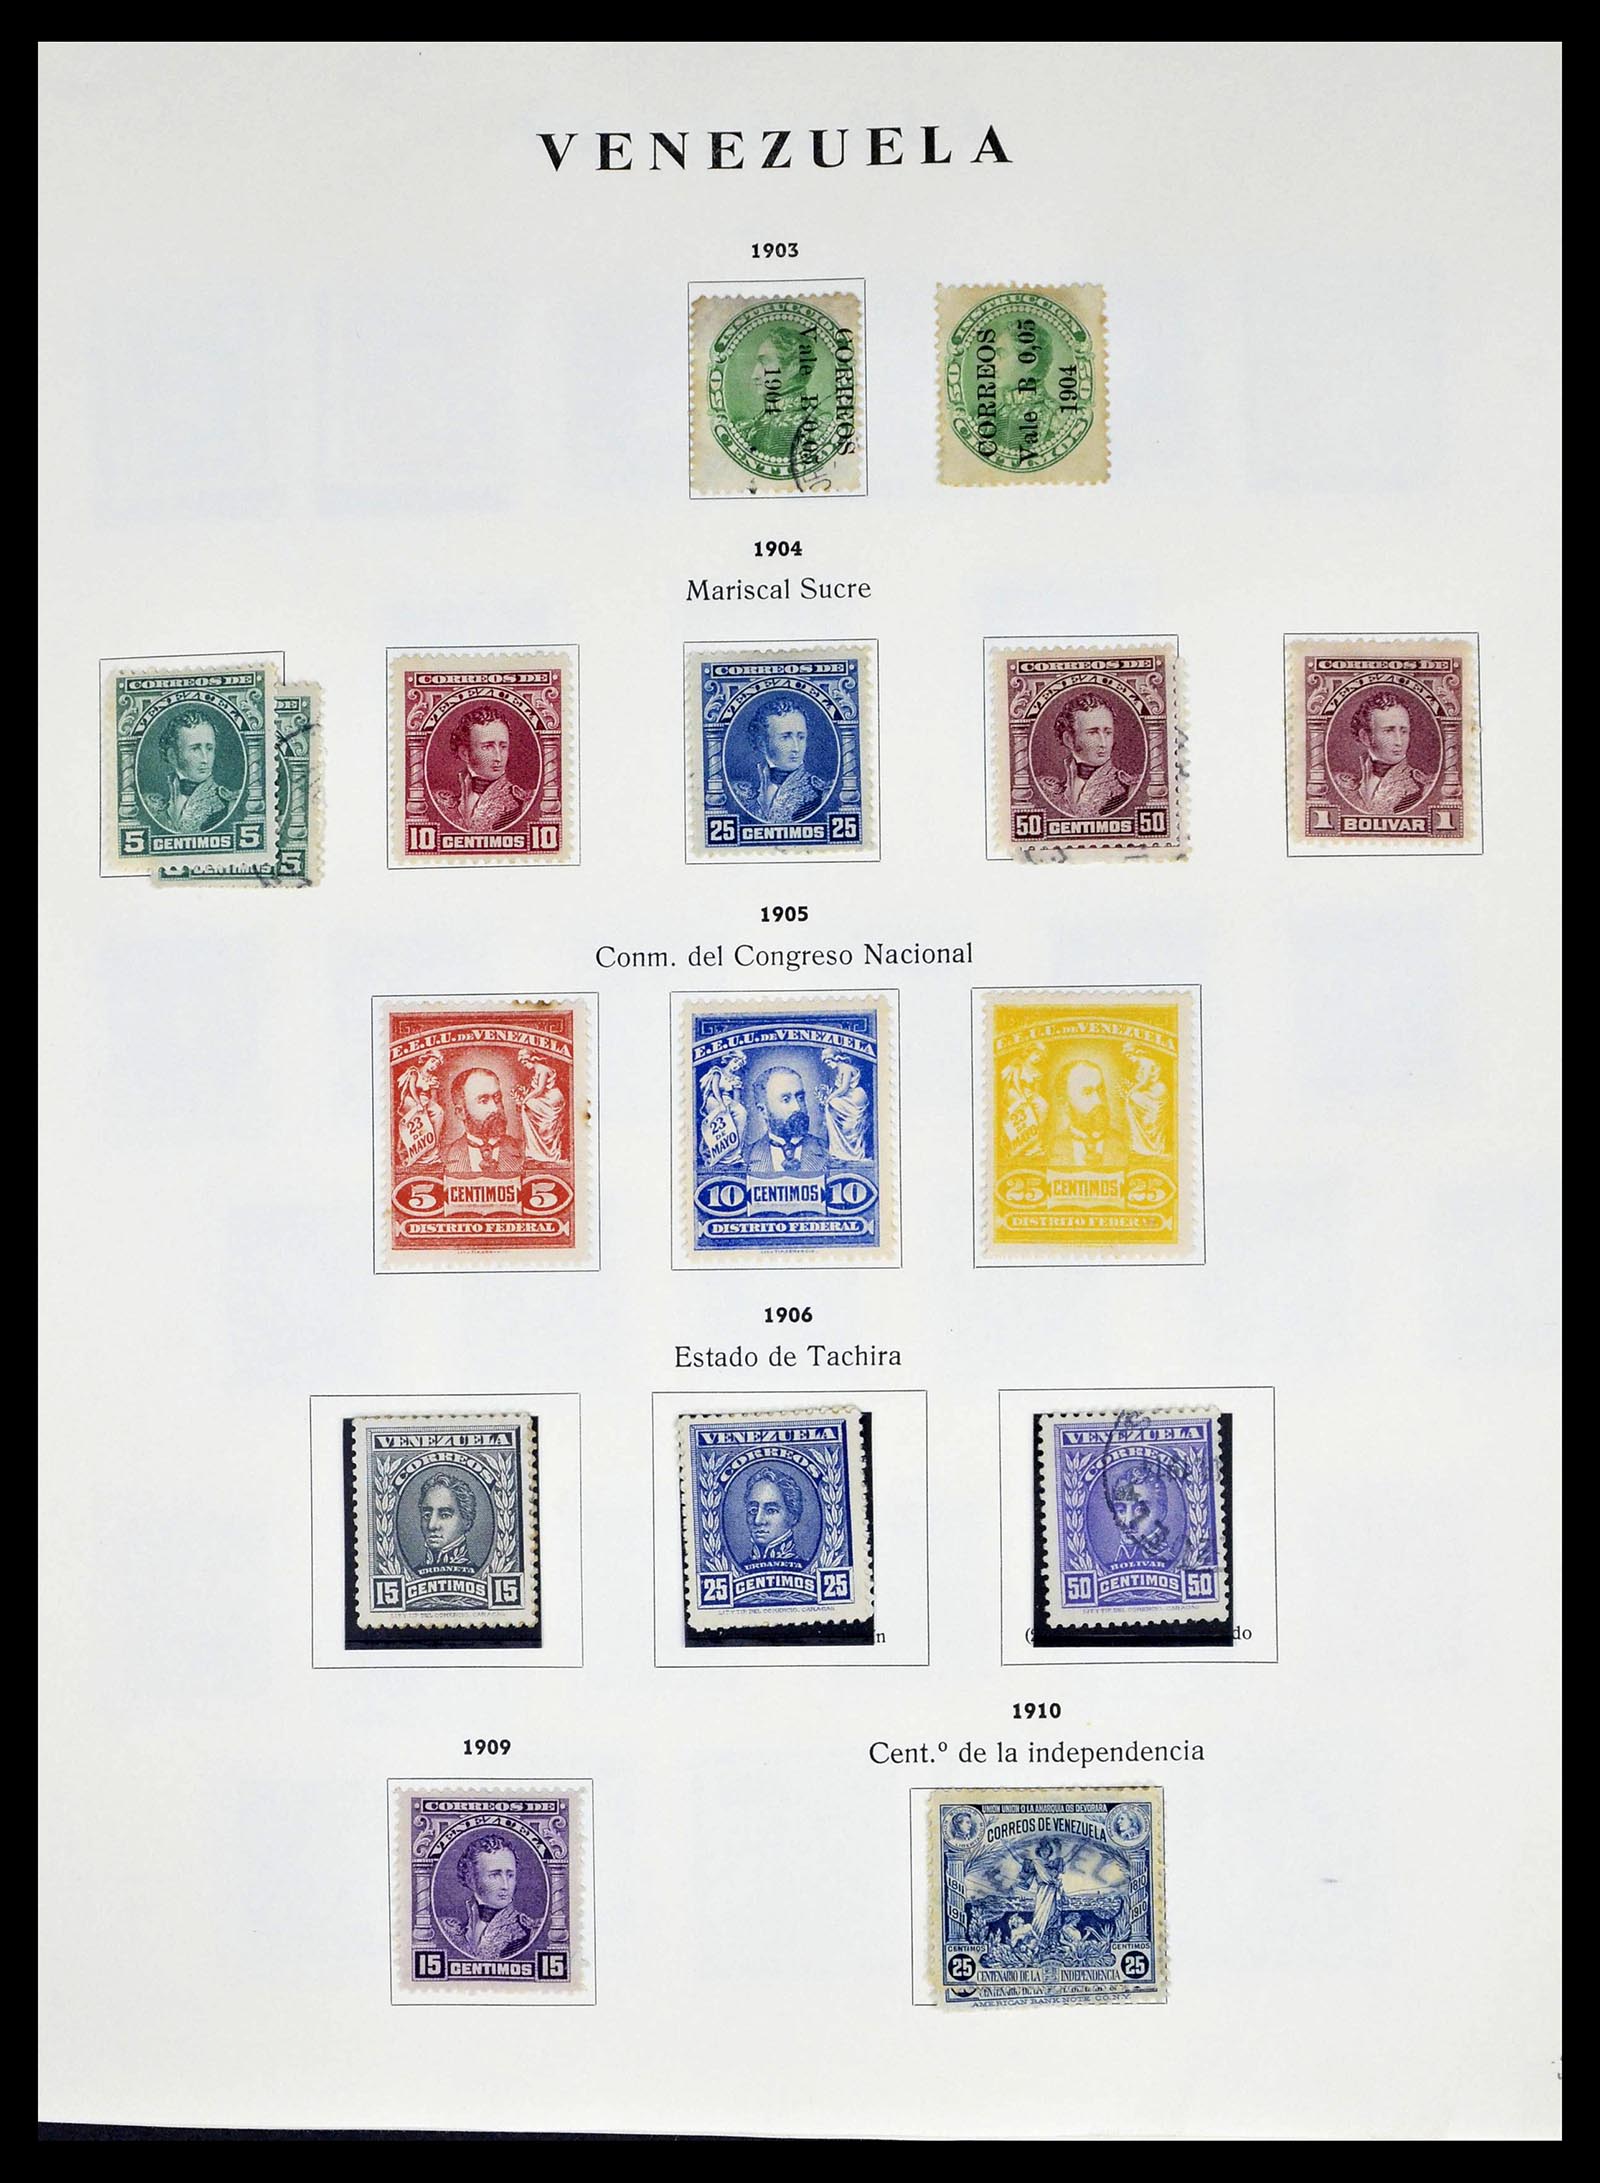 39223 0009 - Stamp collection 39223 Venezuela 1859-1984.